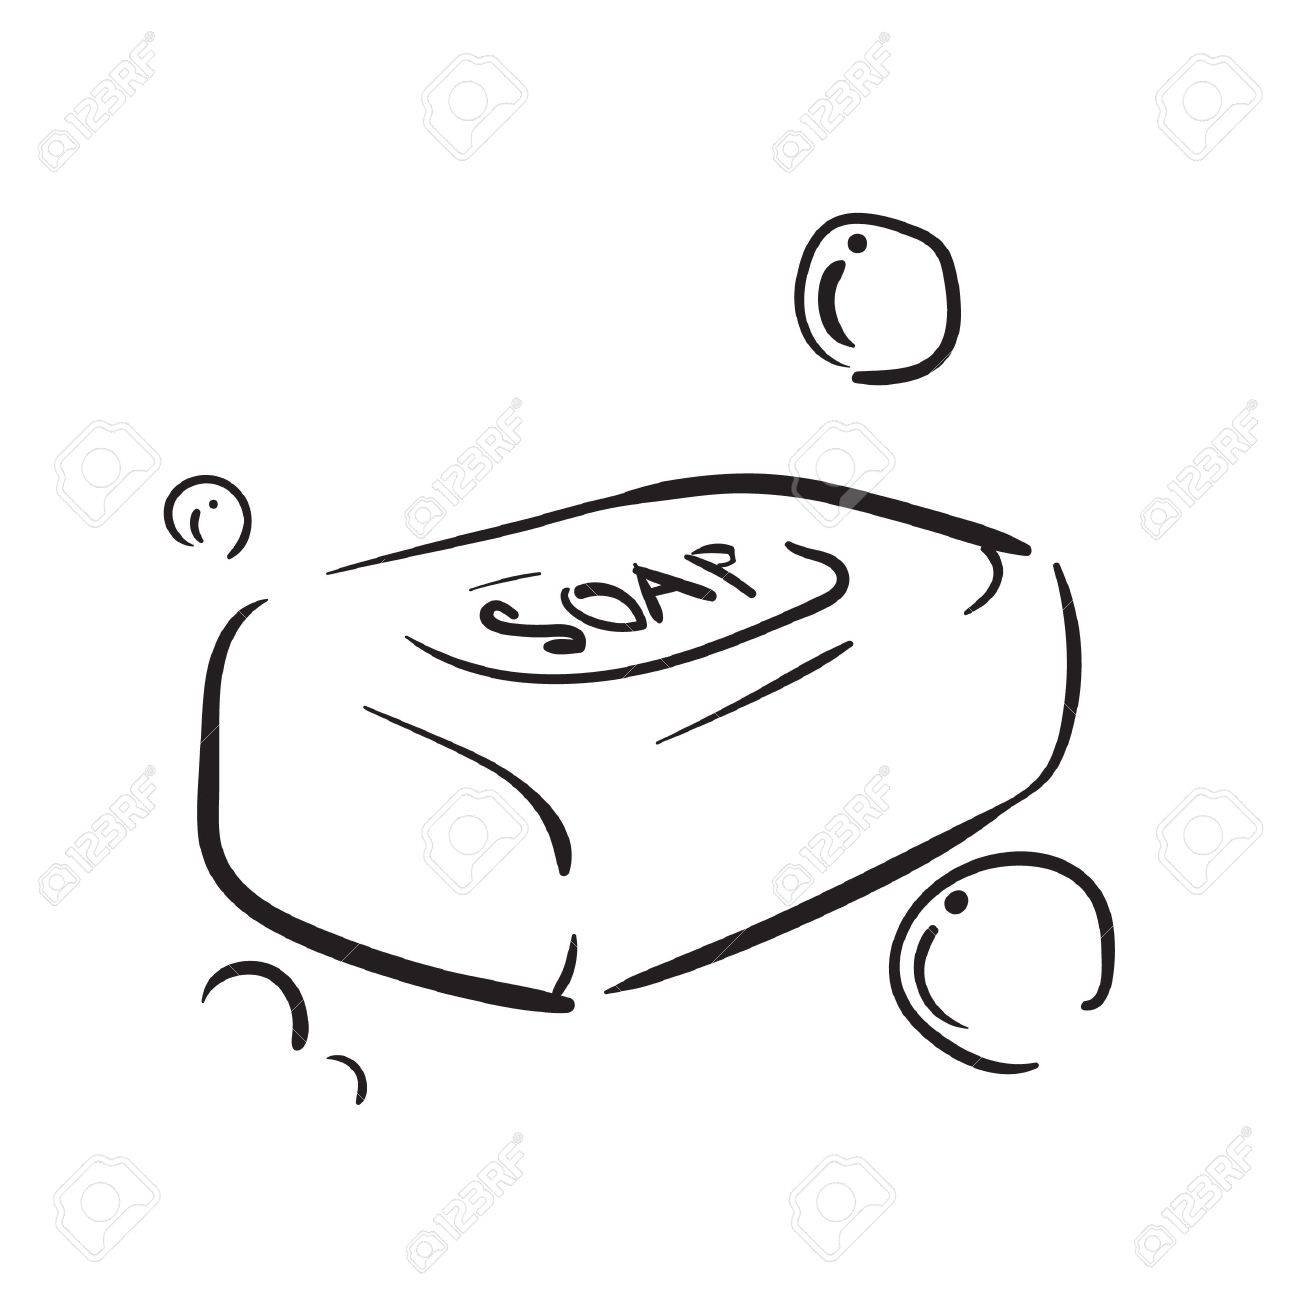 soap clipart sketch